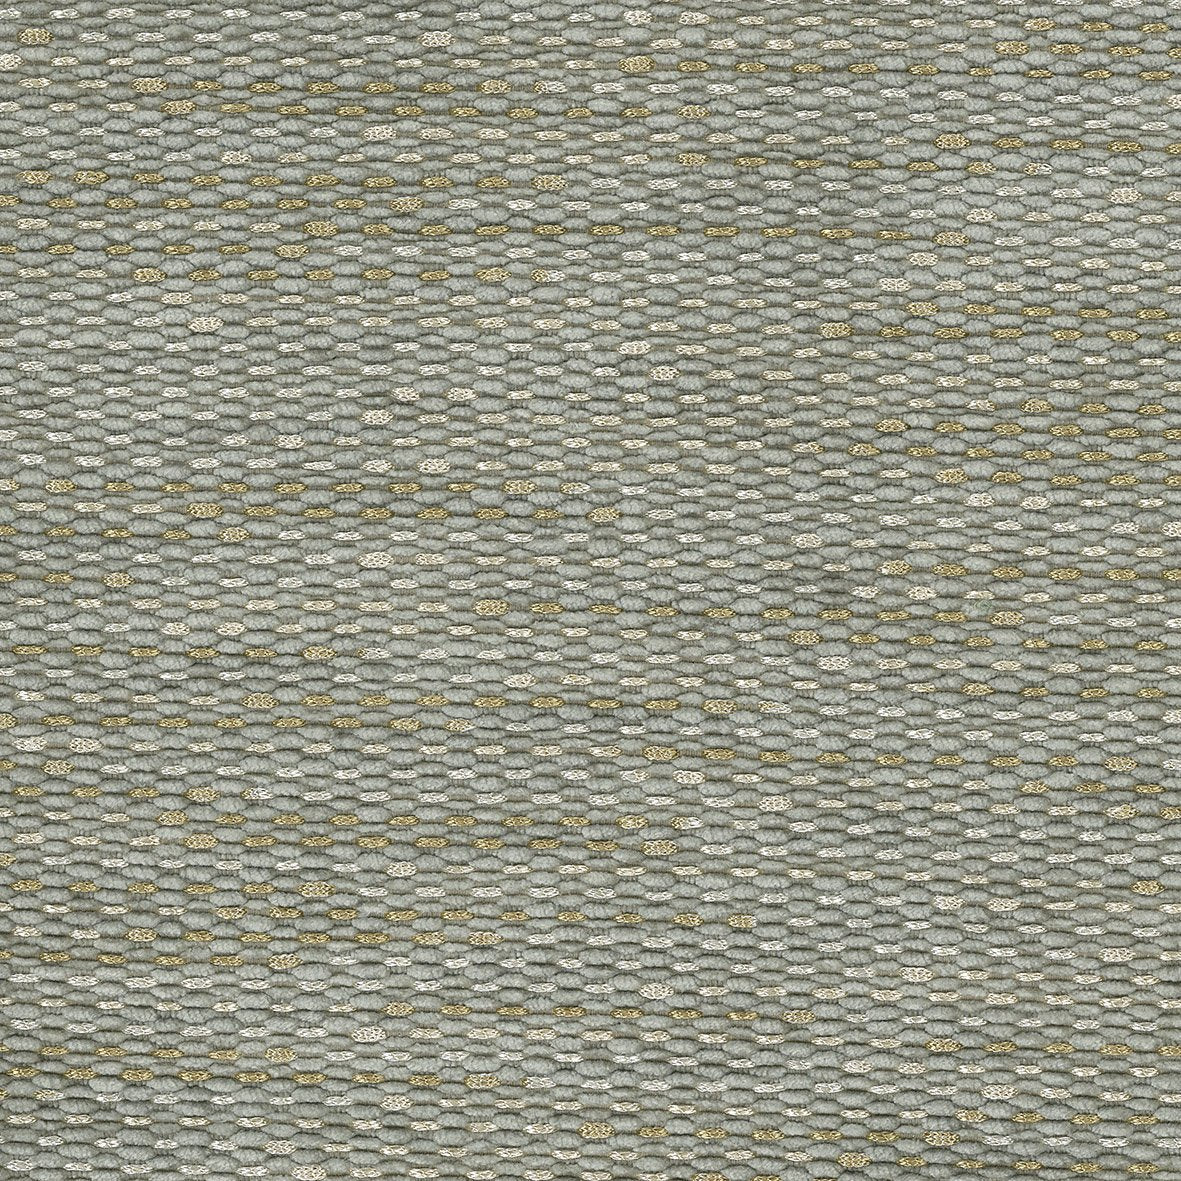 Nina Campbell Fabric - Poquelin Tartuffe Grey/Oyster/Beige NCF4311-02